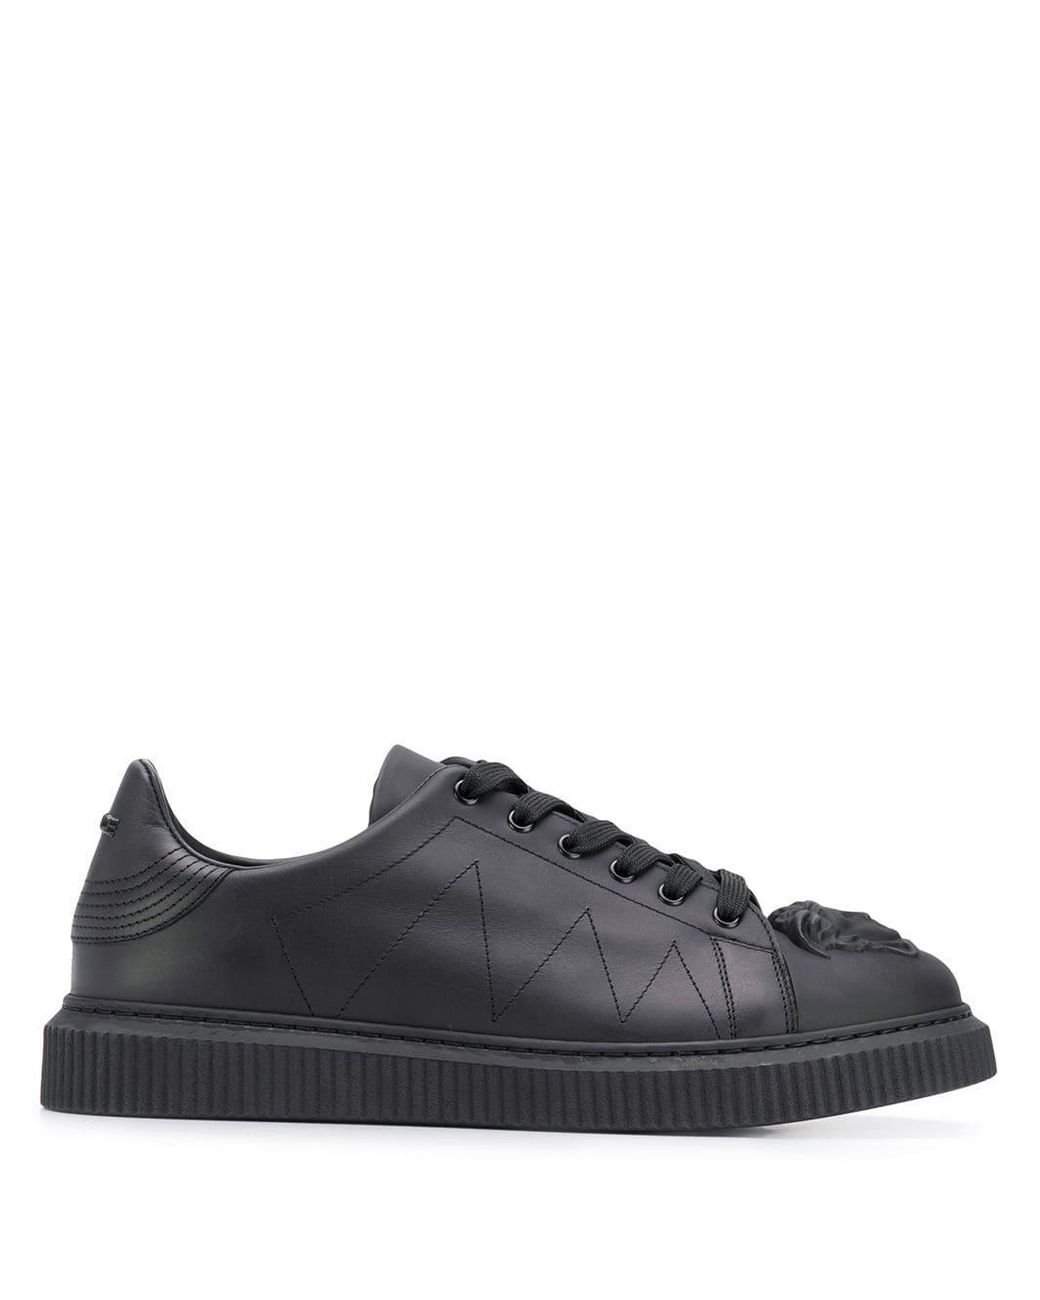 Versace Black Medusa Shoes Store | website.jkuat.ac.ke